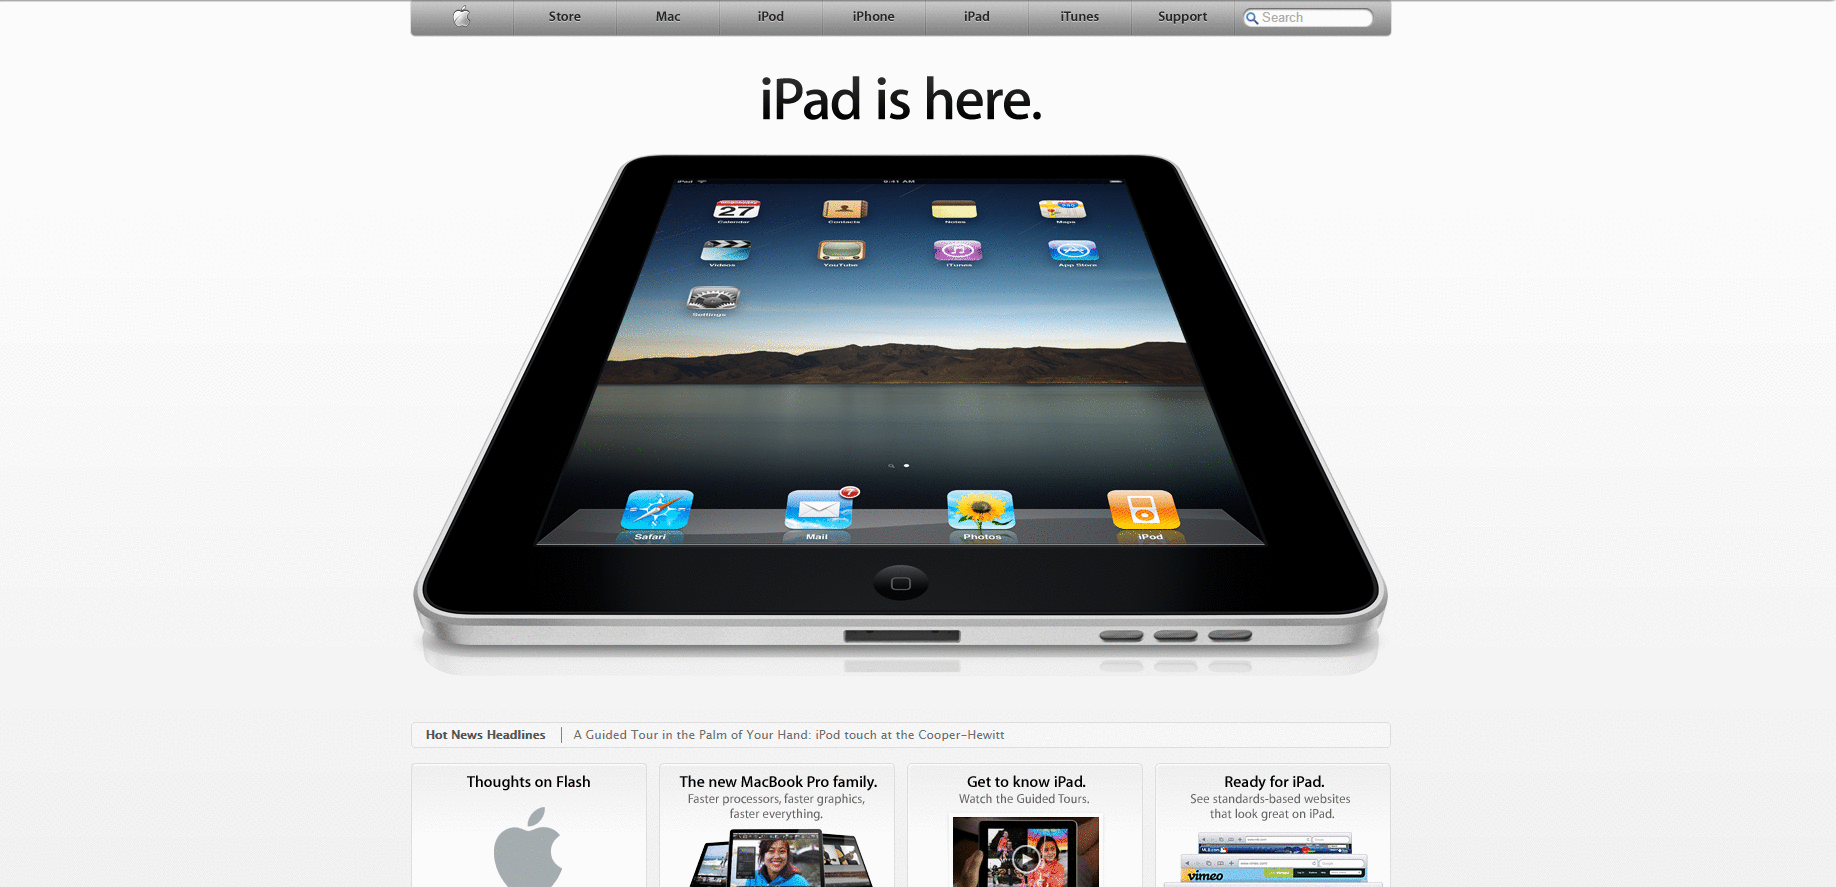 apple.com Website Design in 2010